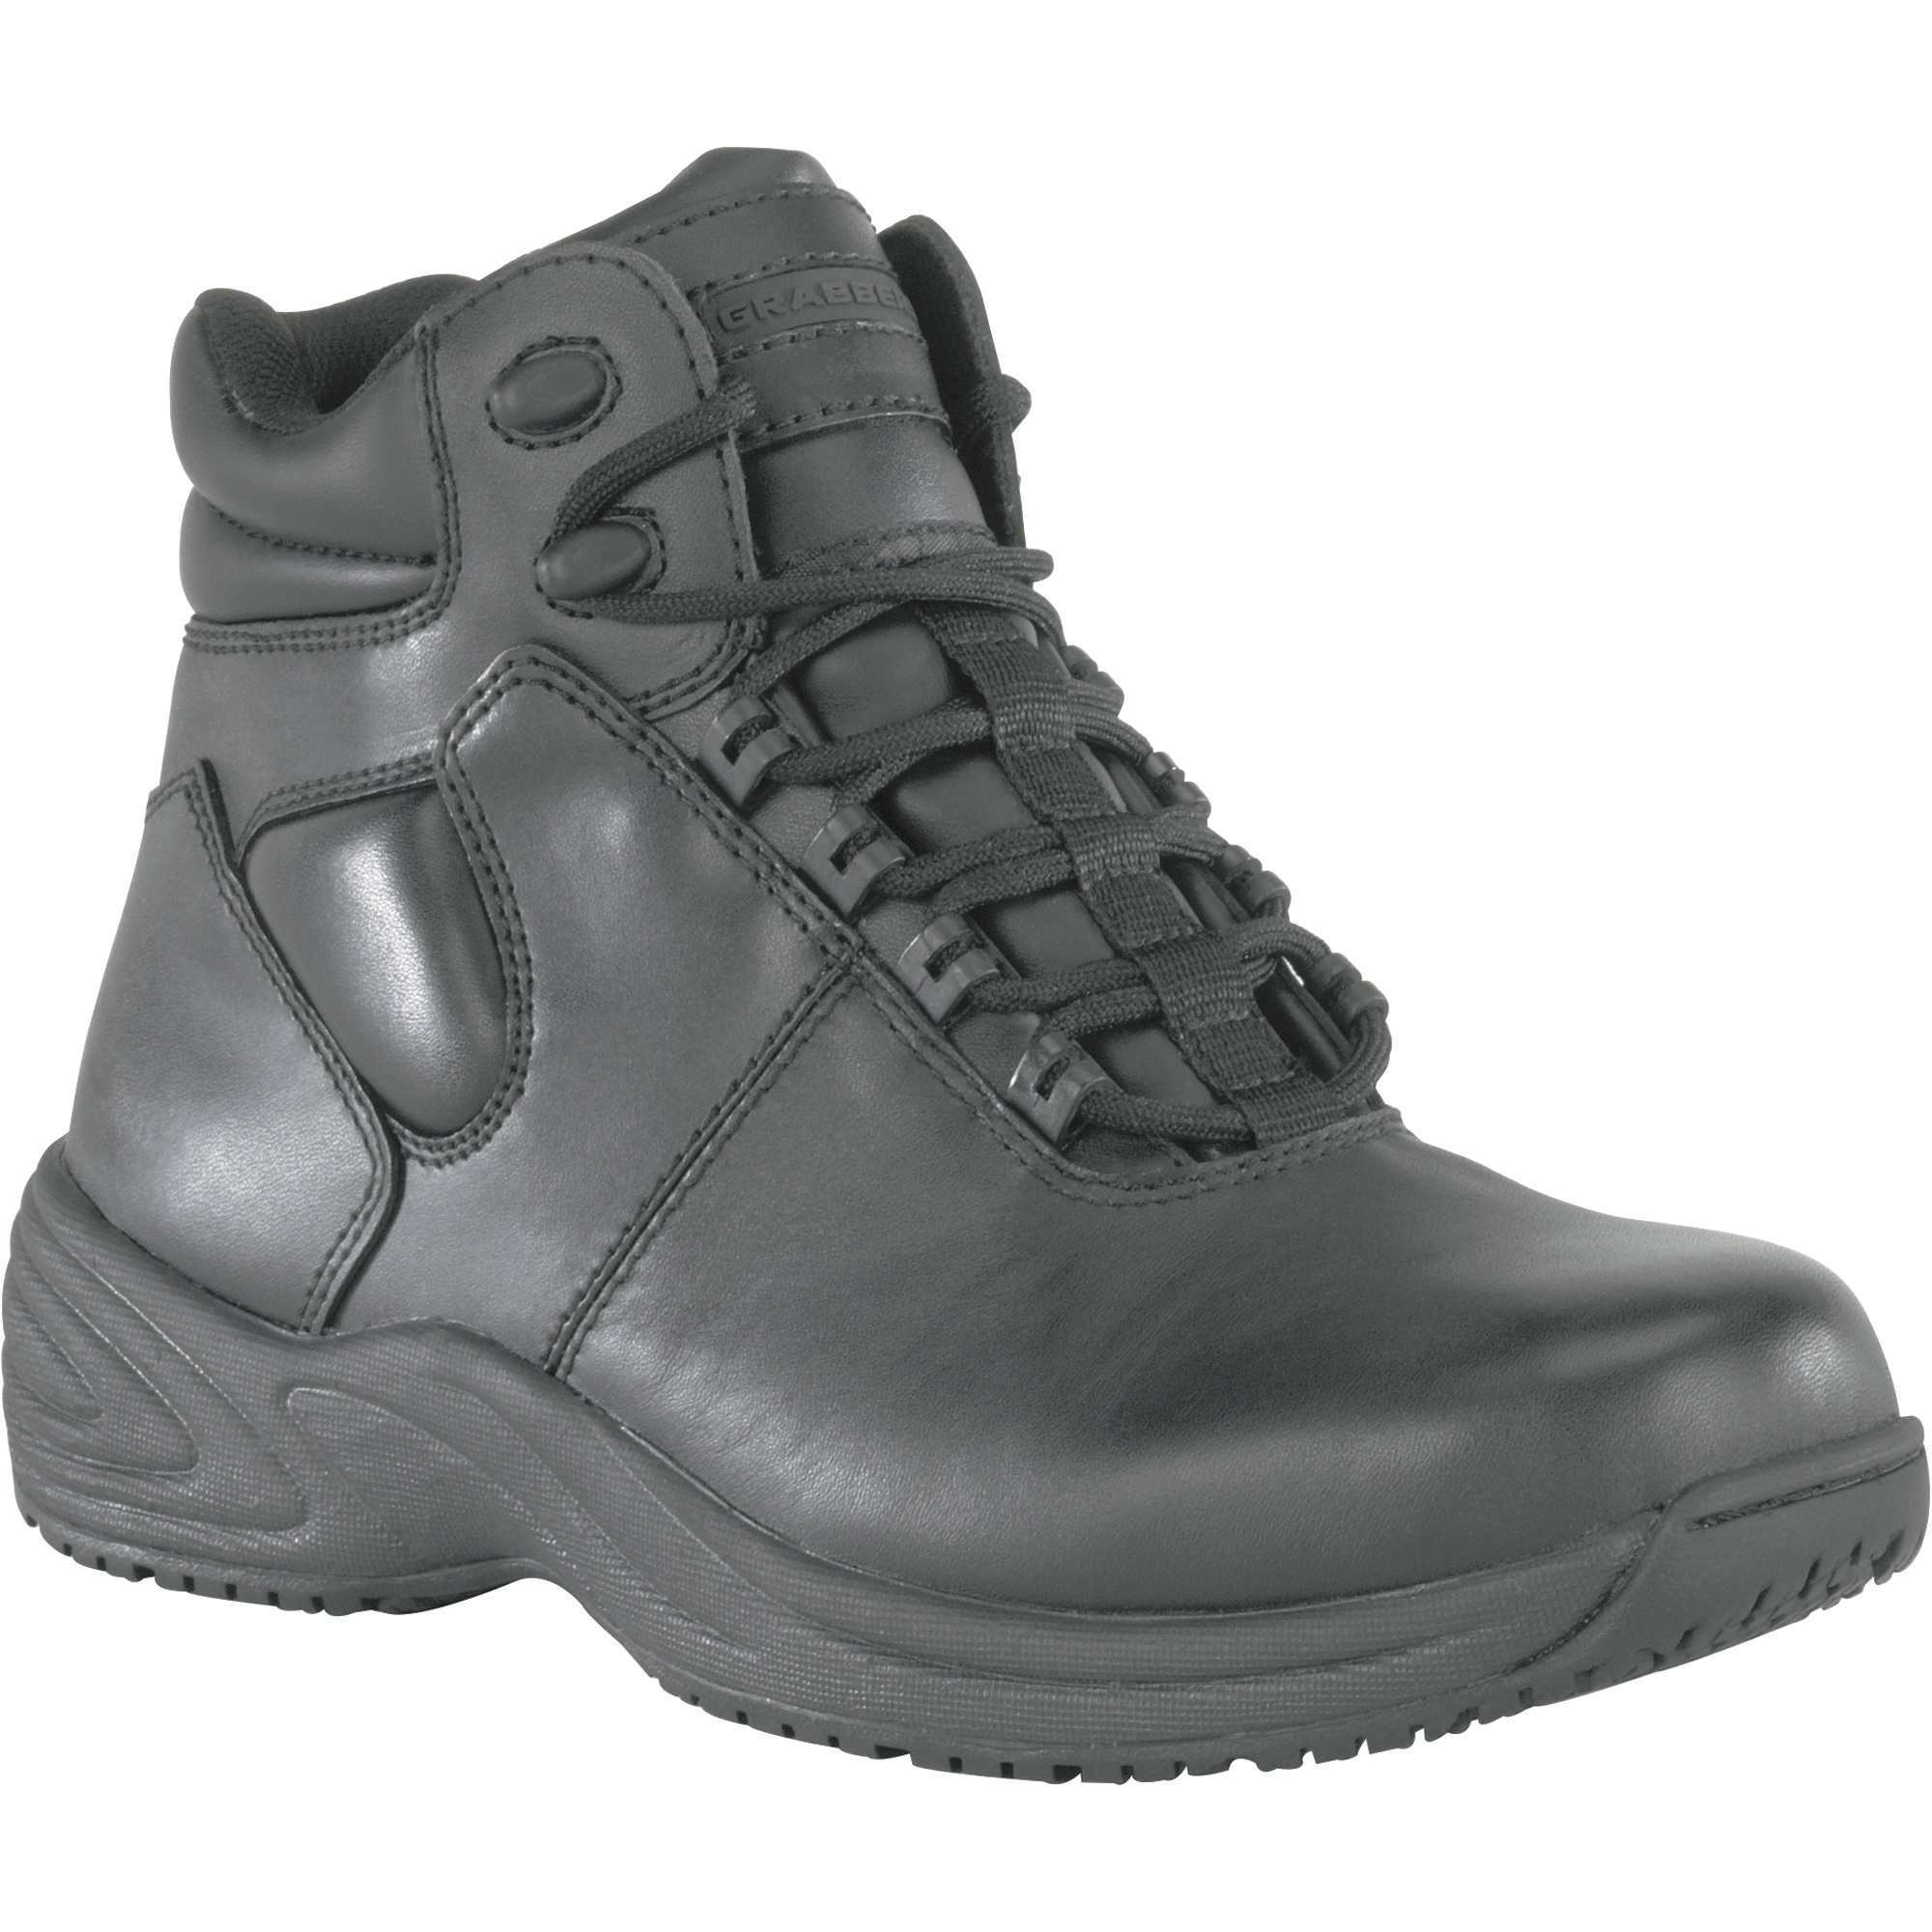 Grabbers Men's 6Inch Fastener Work Boots - Black, Size 13, Model G1240